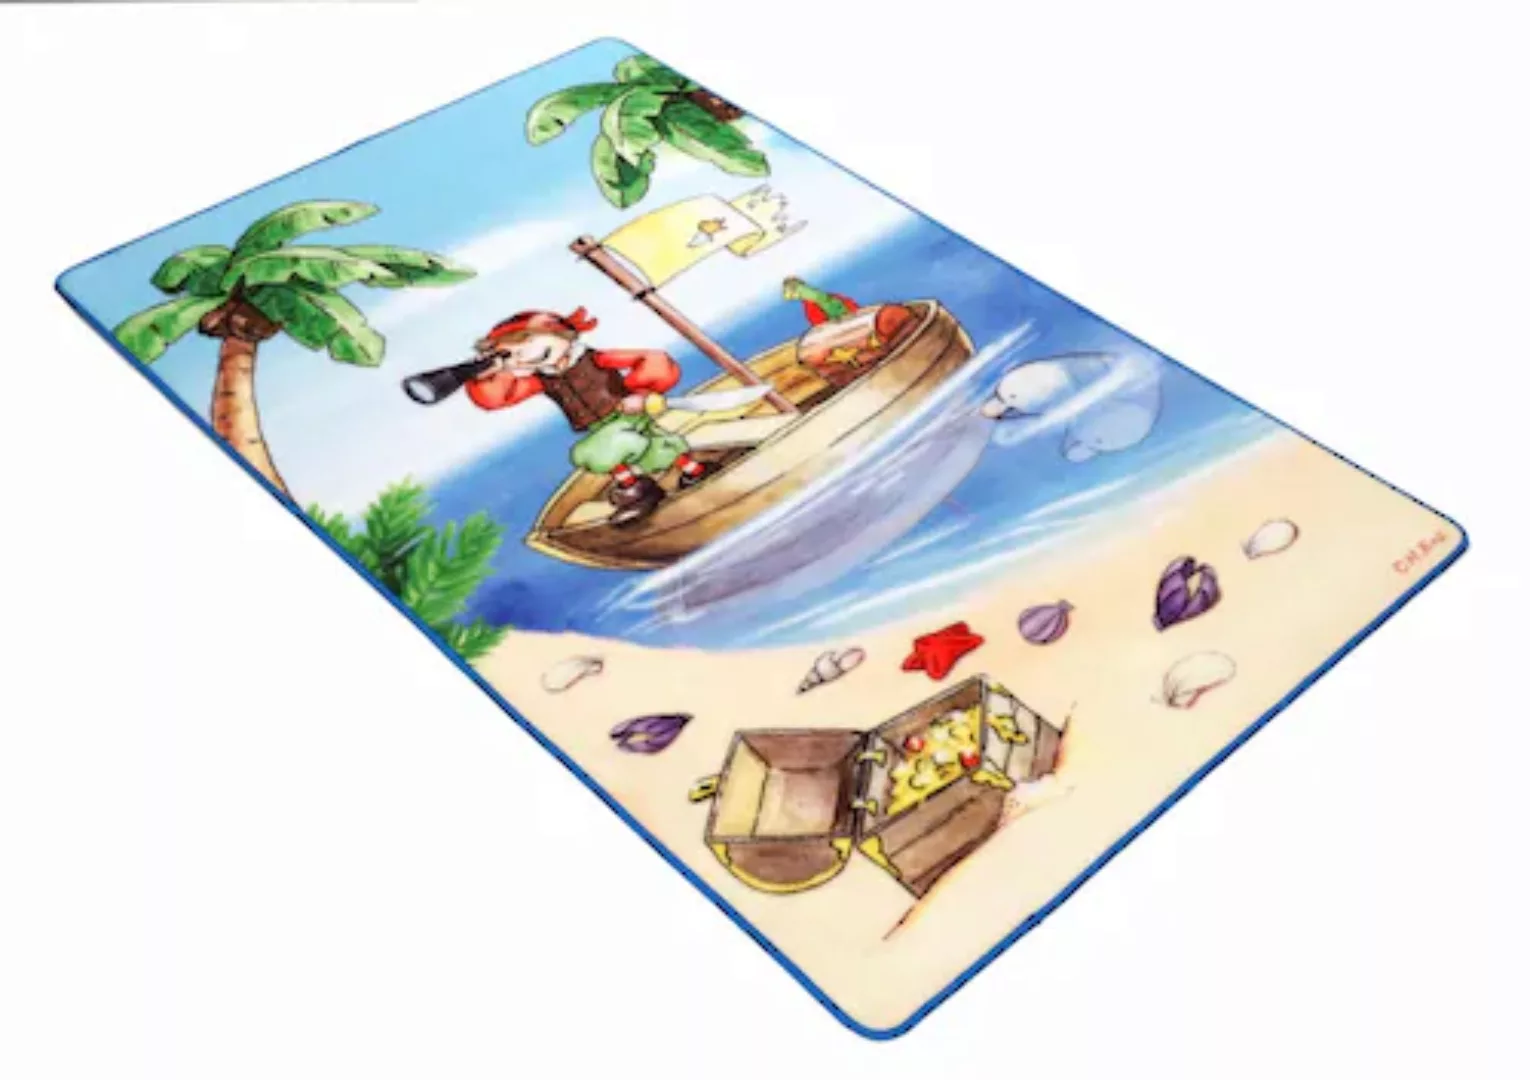 Böing Carpet Kinderteppich »Lovely Kids LK-1«, rechteckig, Motiv Pirat, Kin günstig online kaufen